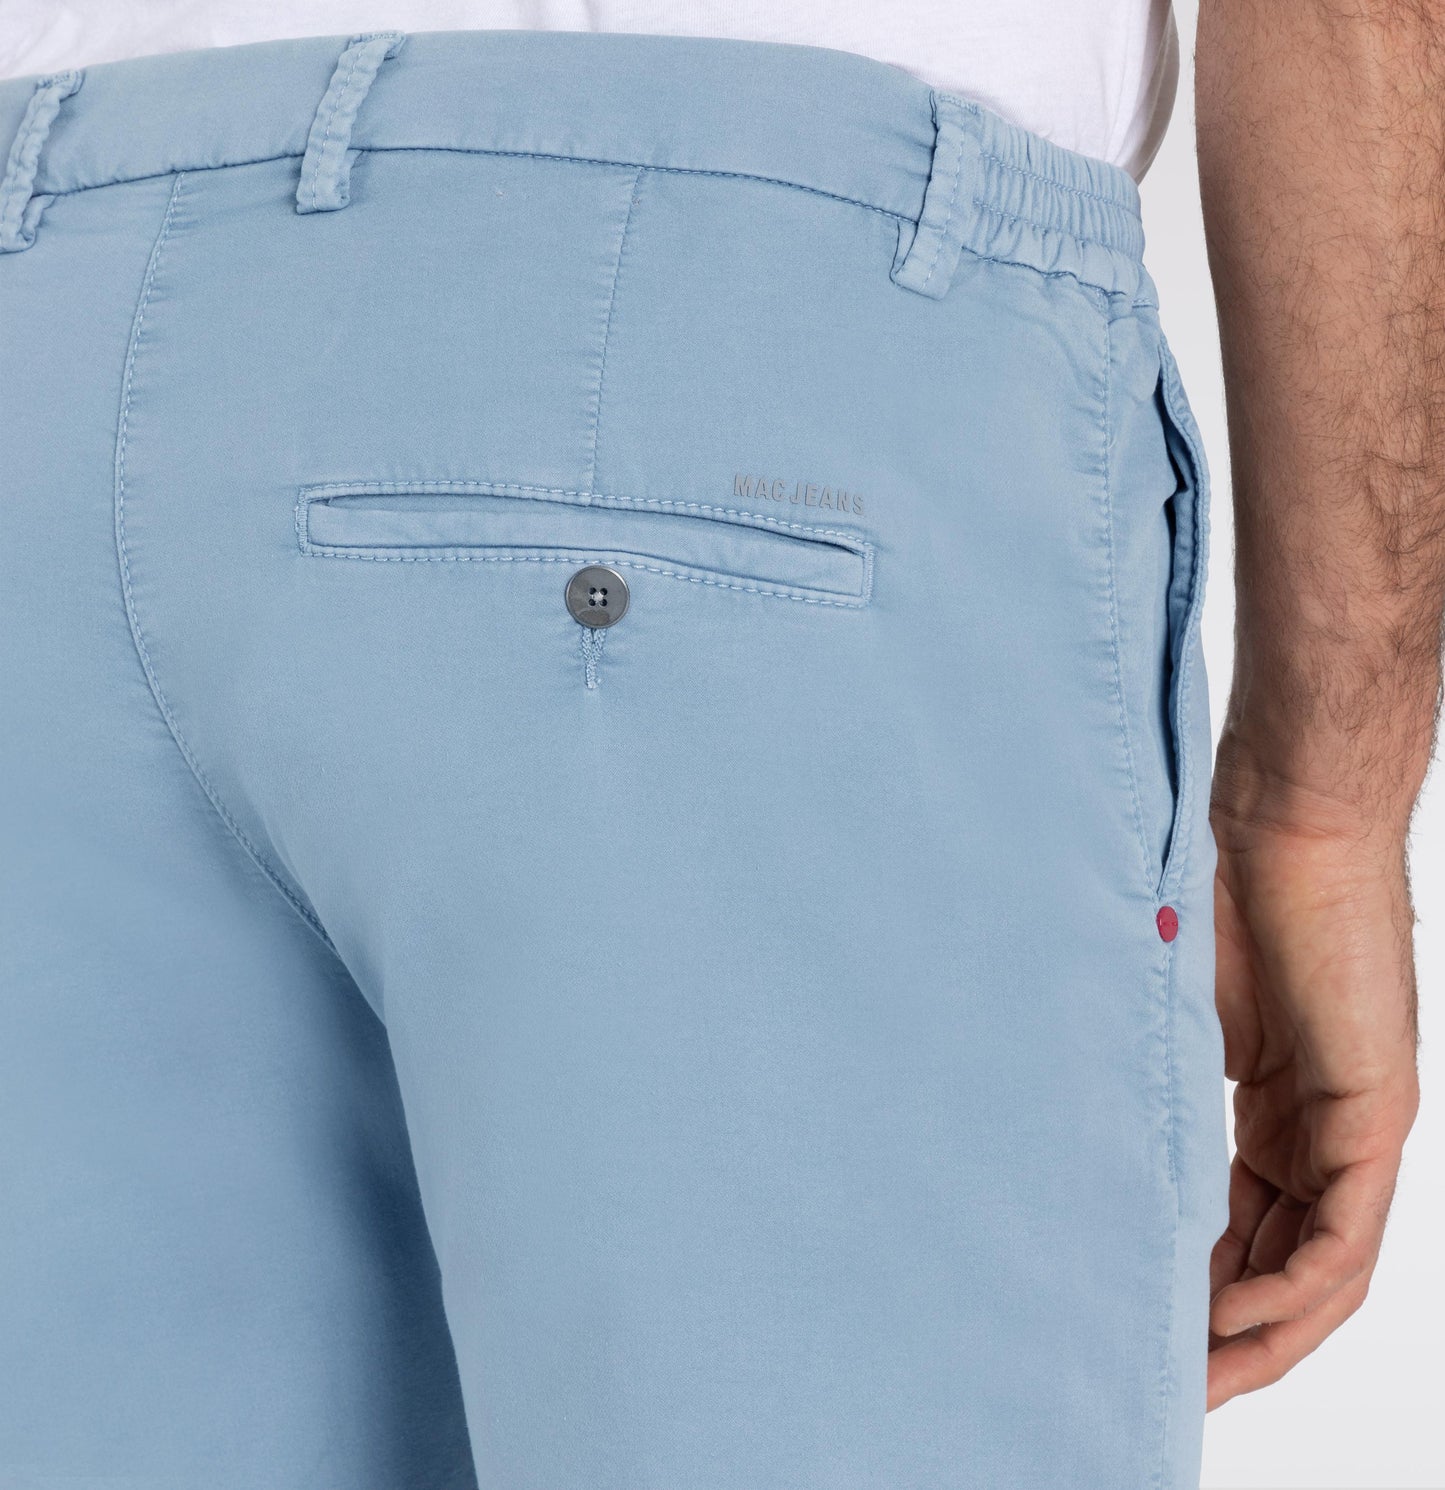 Jog'n short in blue by MAC Jeans